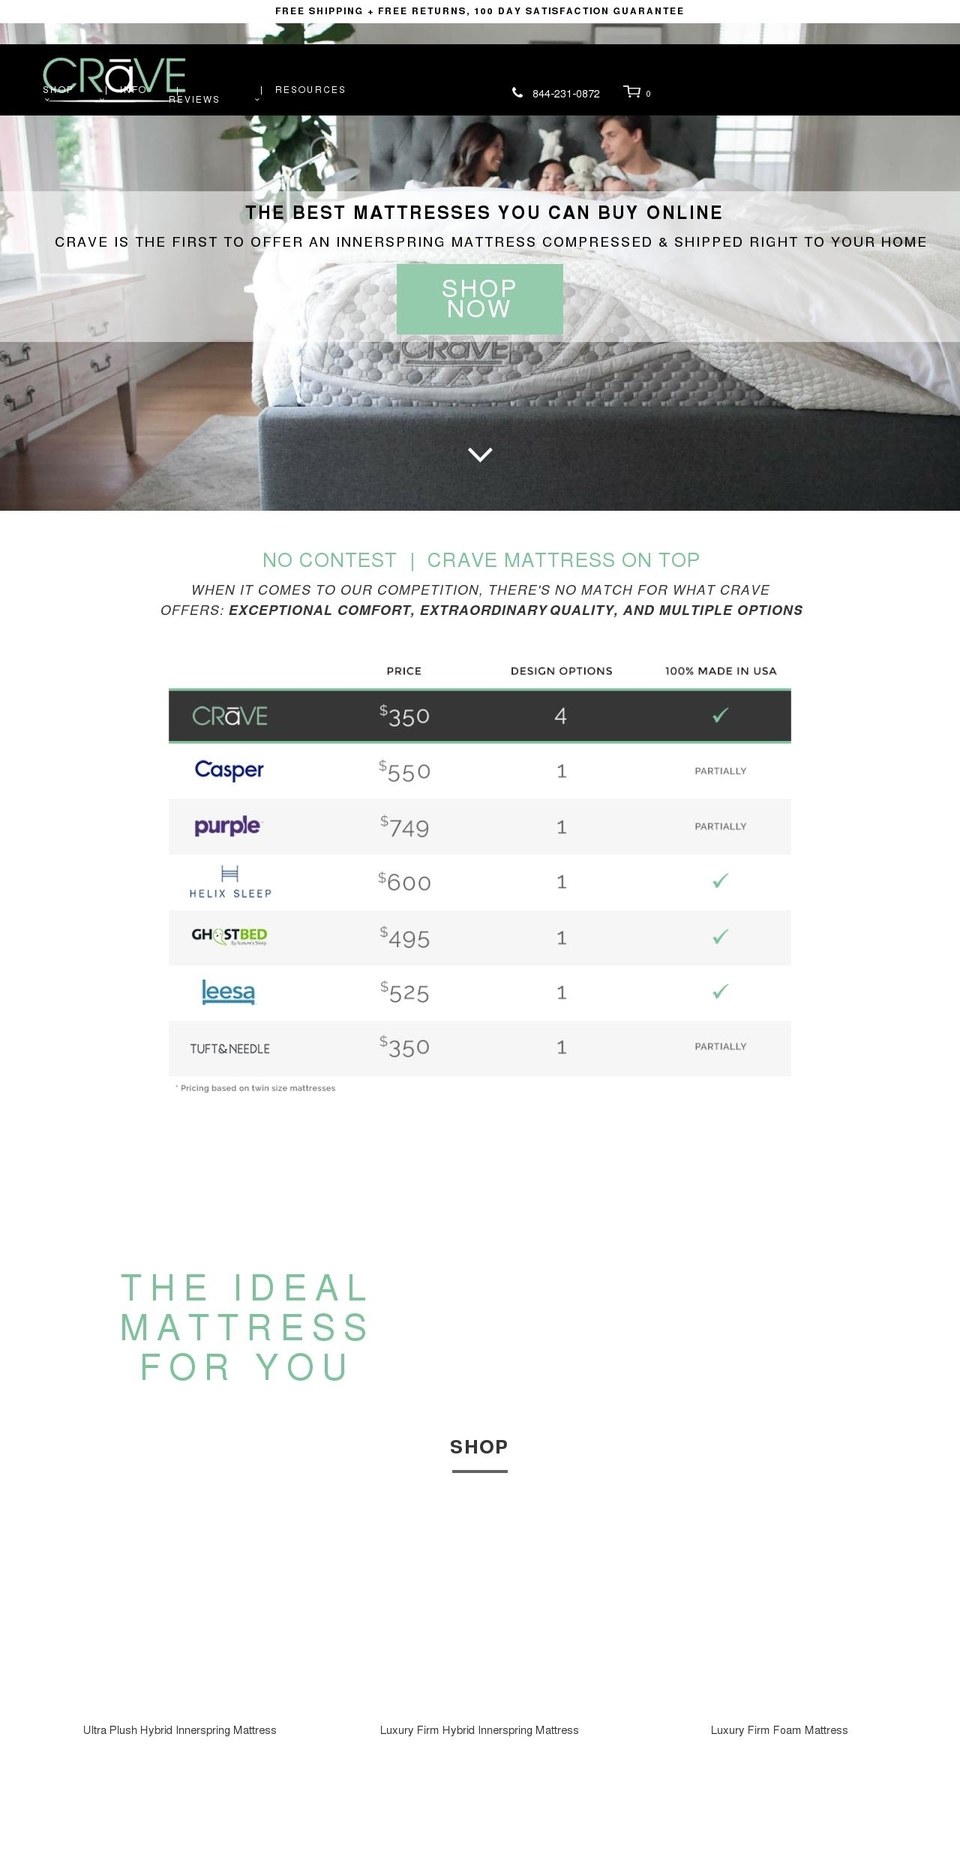 cravemattress.com shopify website screenshot